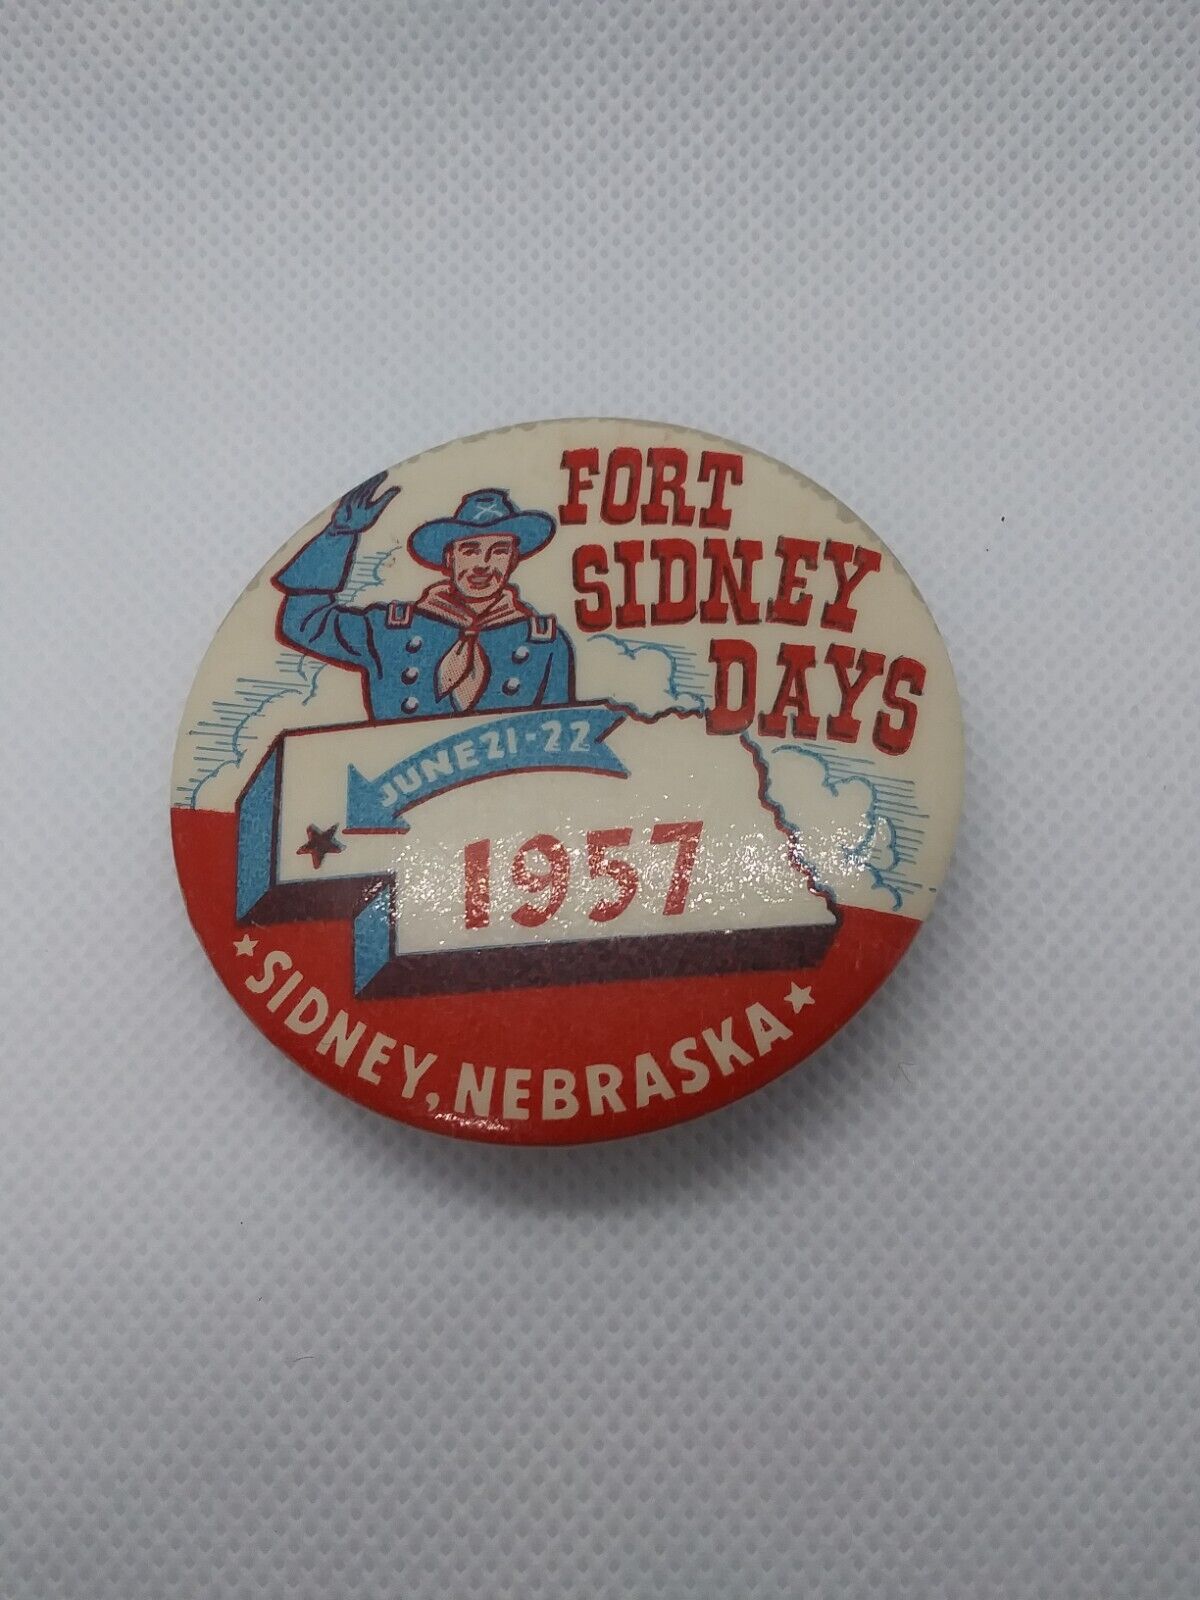 Vintage 1957 June 21-22 Fort Sidney Days Sidney Nebraska Pinback